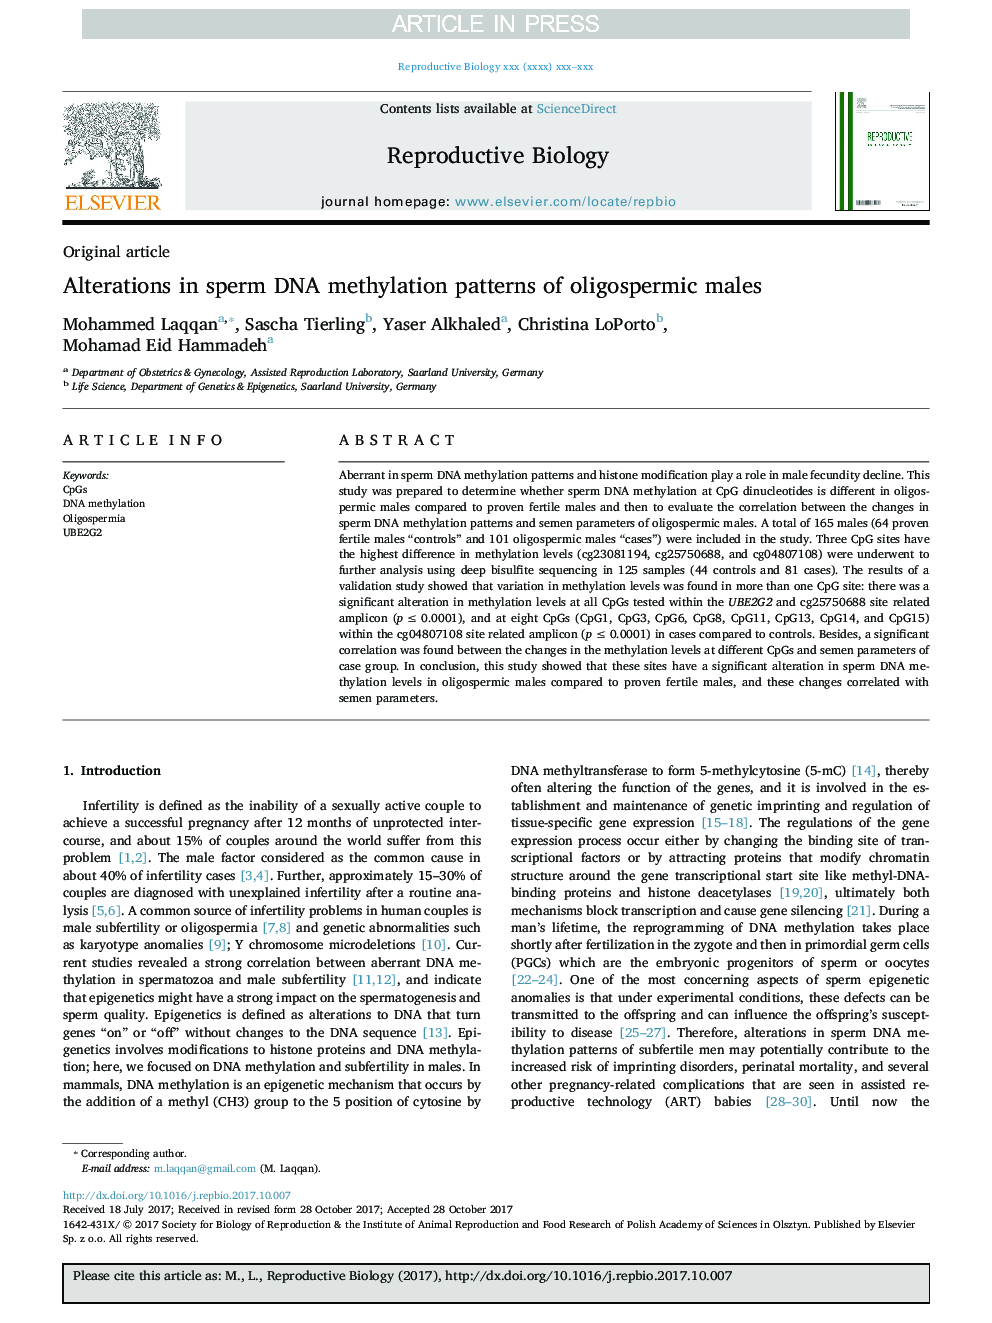 Alterations in sperm DNA methylation patterns of oligospermic males